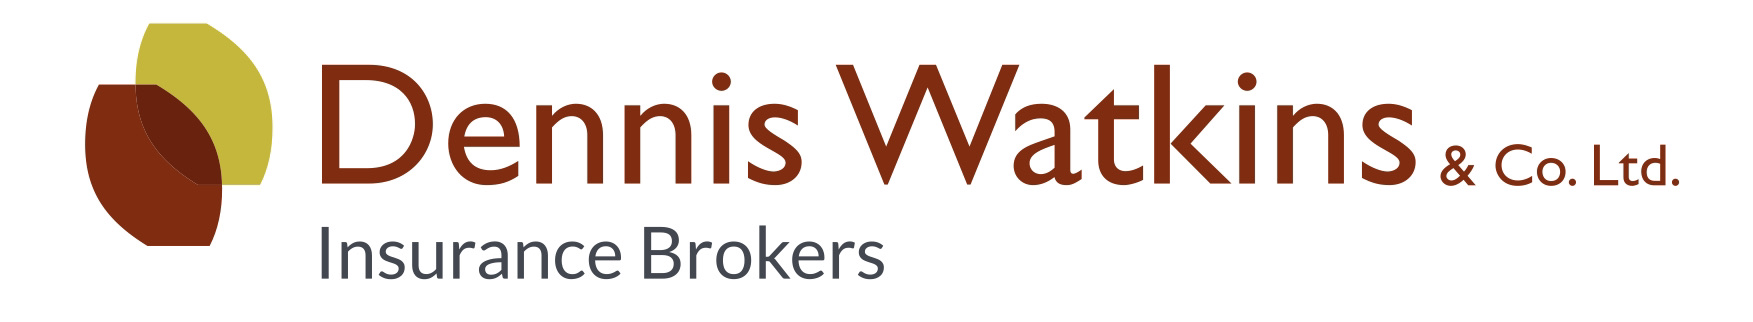 Dennis Watkins Logo